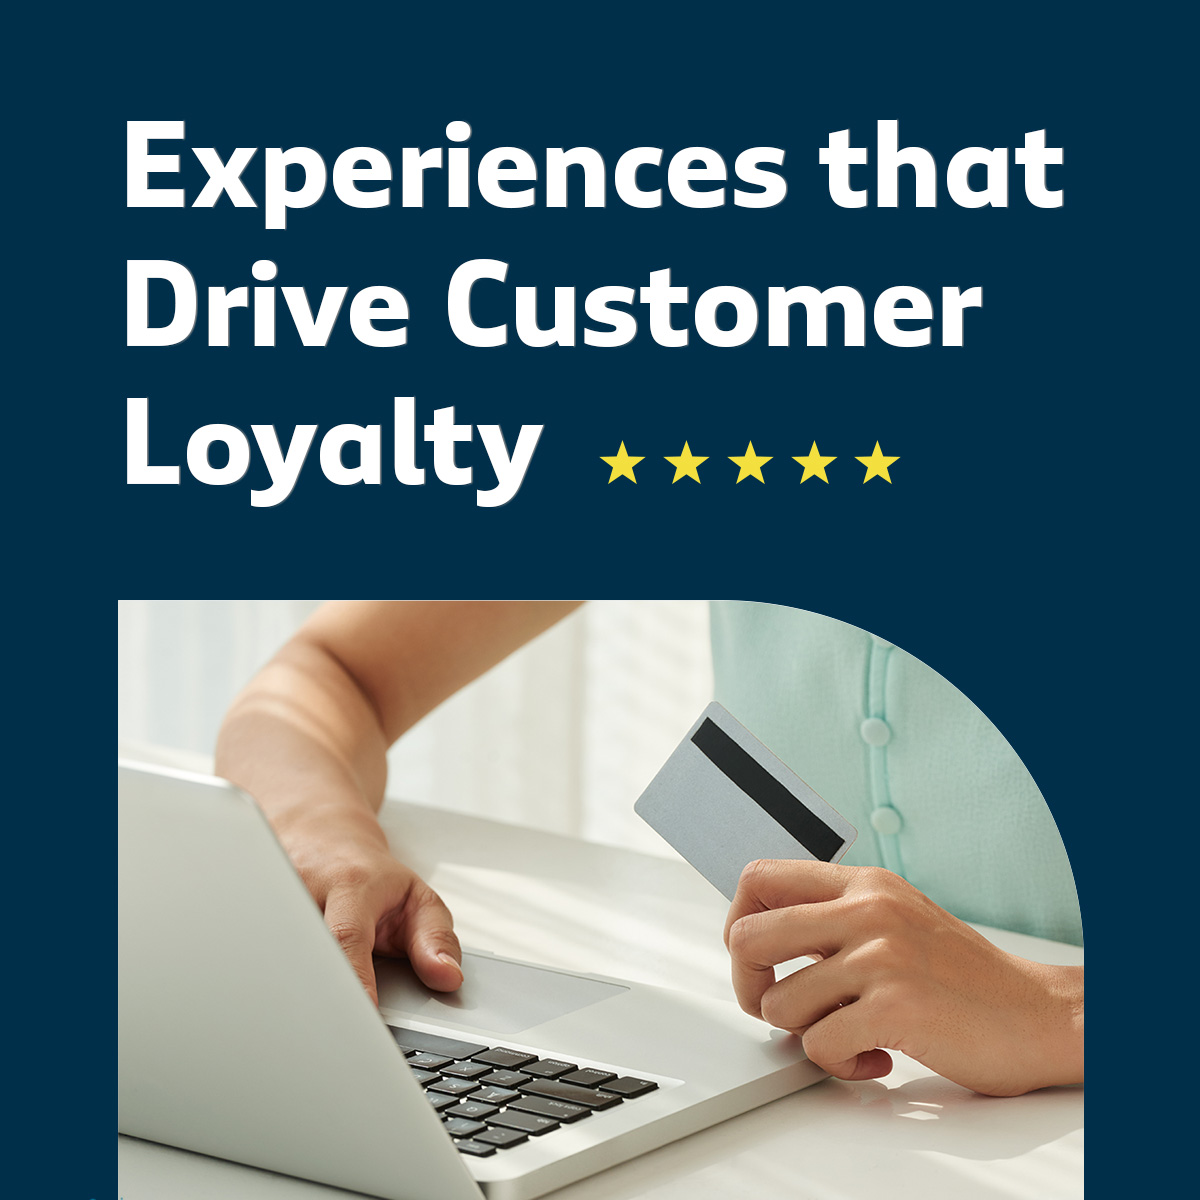 Driving customer loyalty